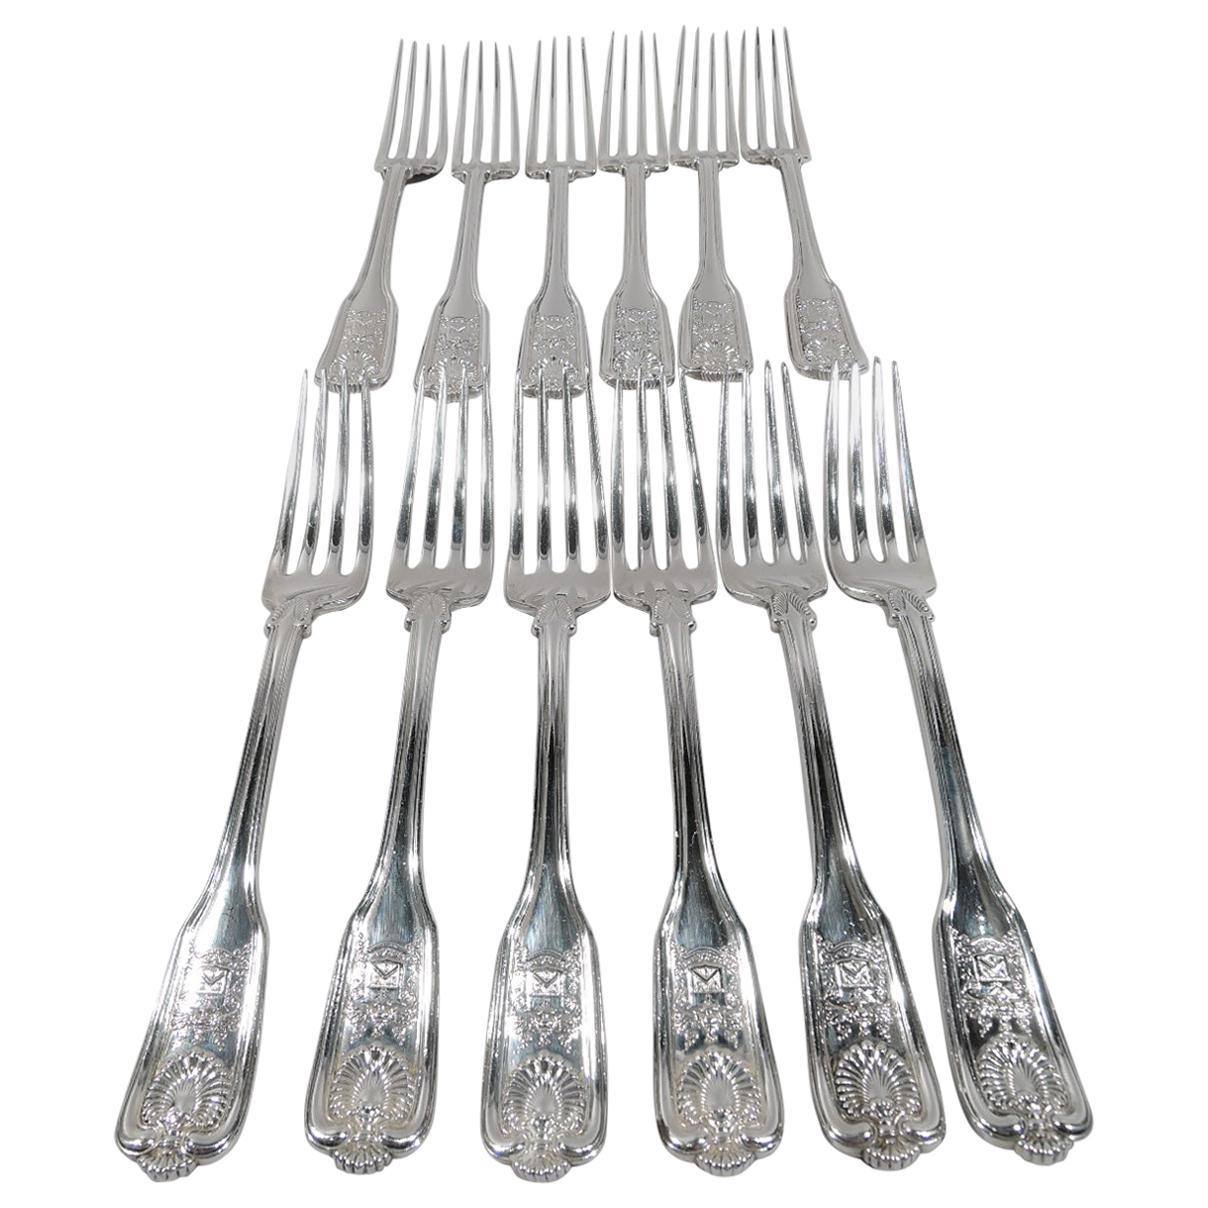 12 Dinner Forks from the Rhode Island Brown Family Custom Pattern